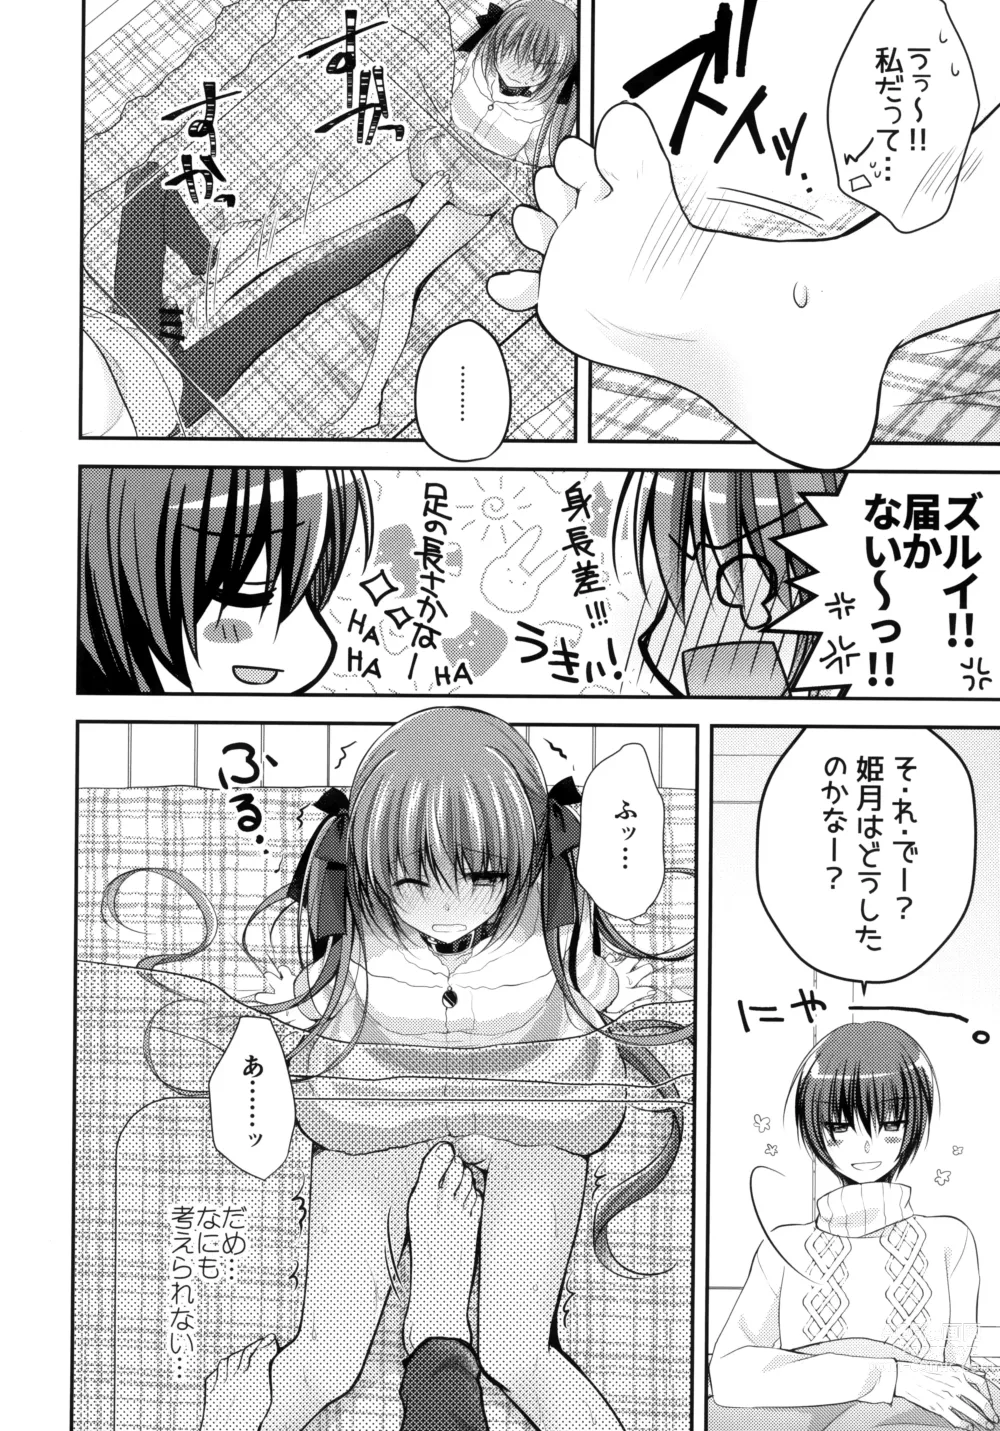 Page 11 of doujinshi Imouto Choukyou Nikki and more 5